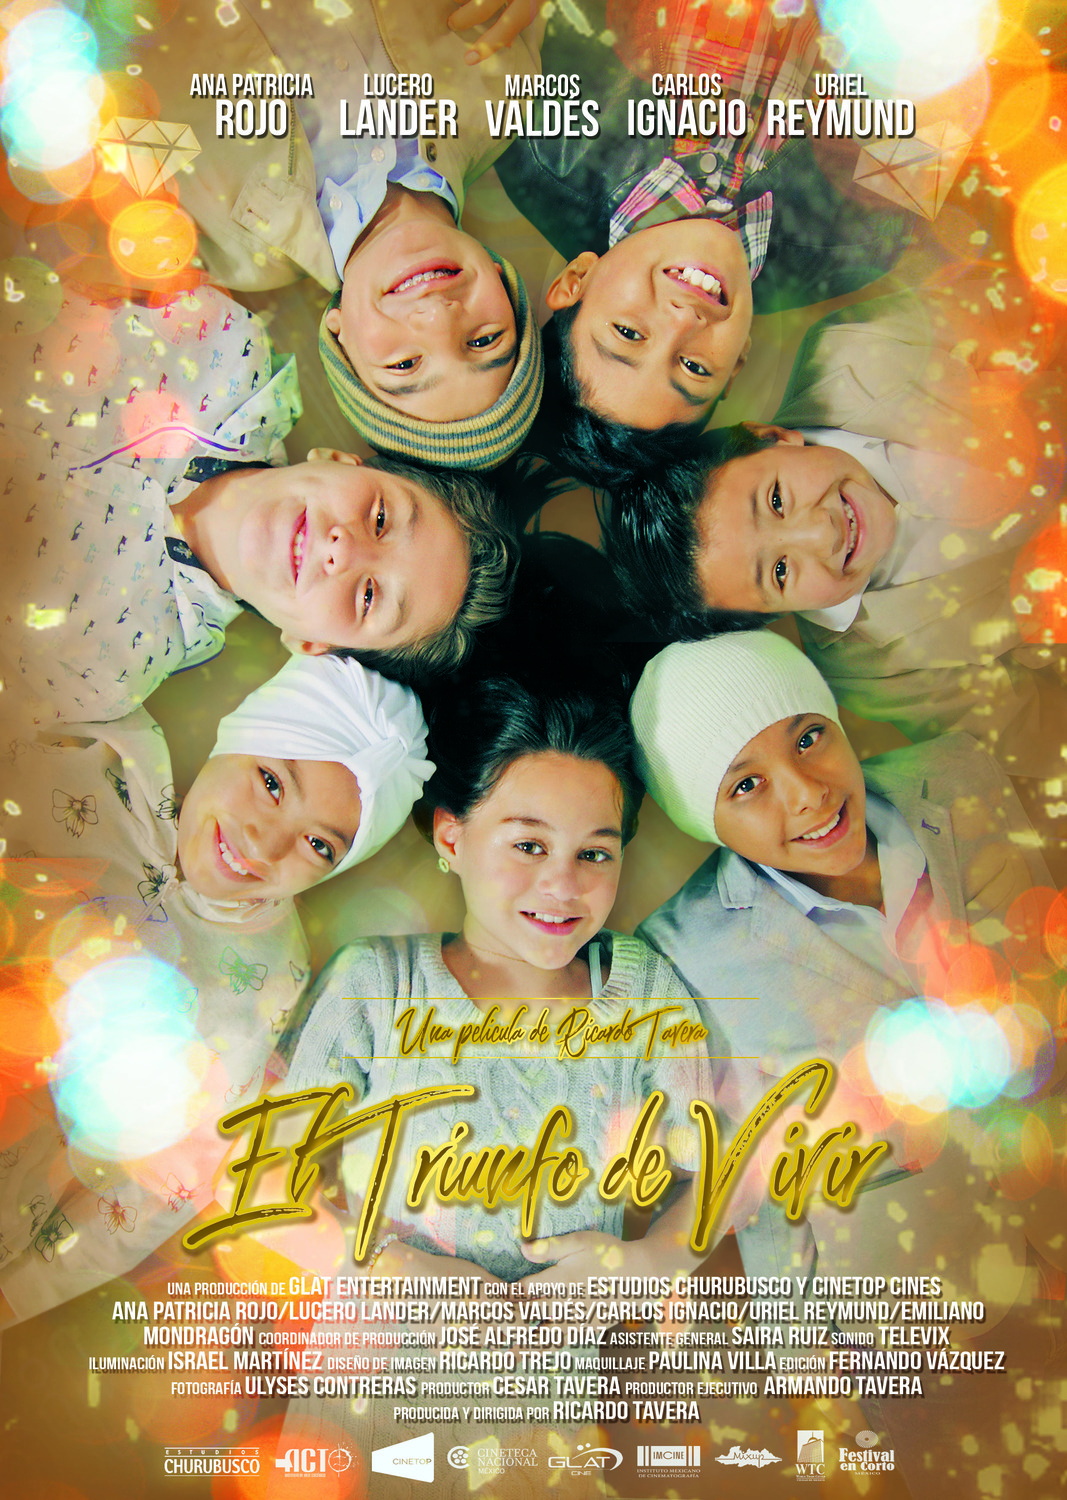 Extra Large Movie Poster Image for El Triunfo de Vivir 